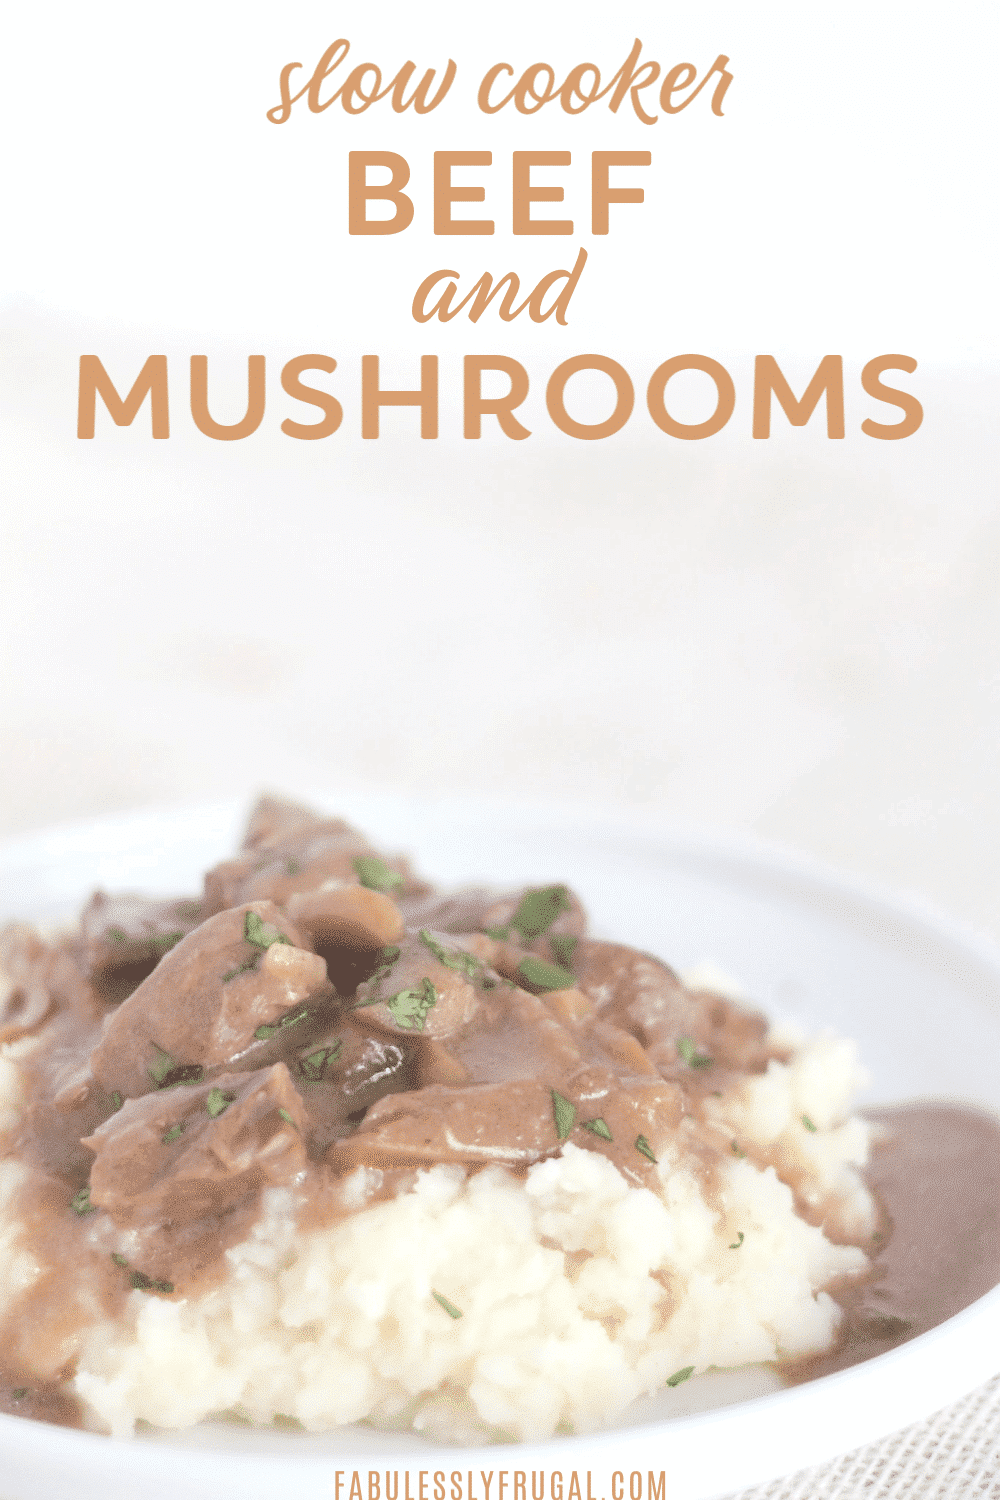 Crockpot beef and mushrooms